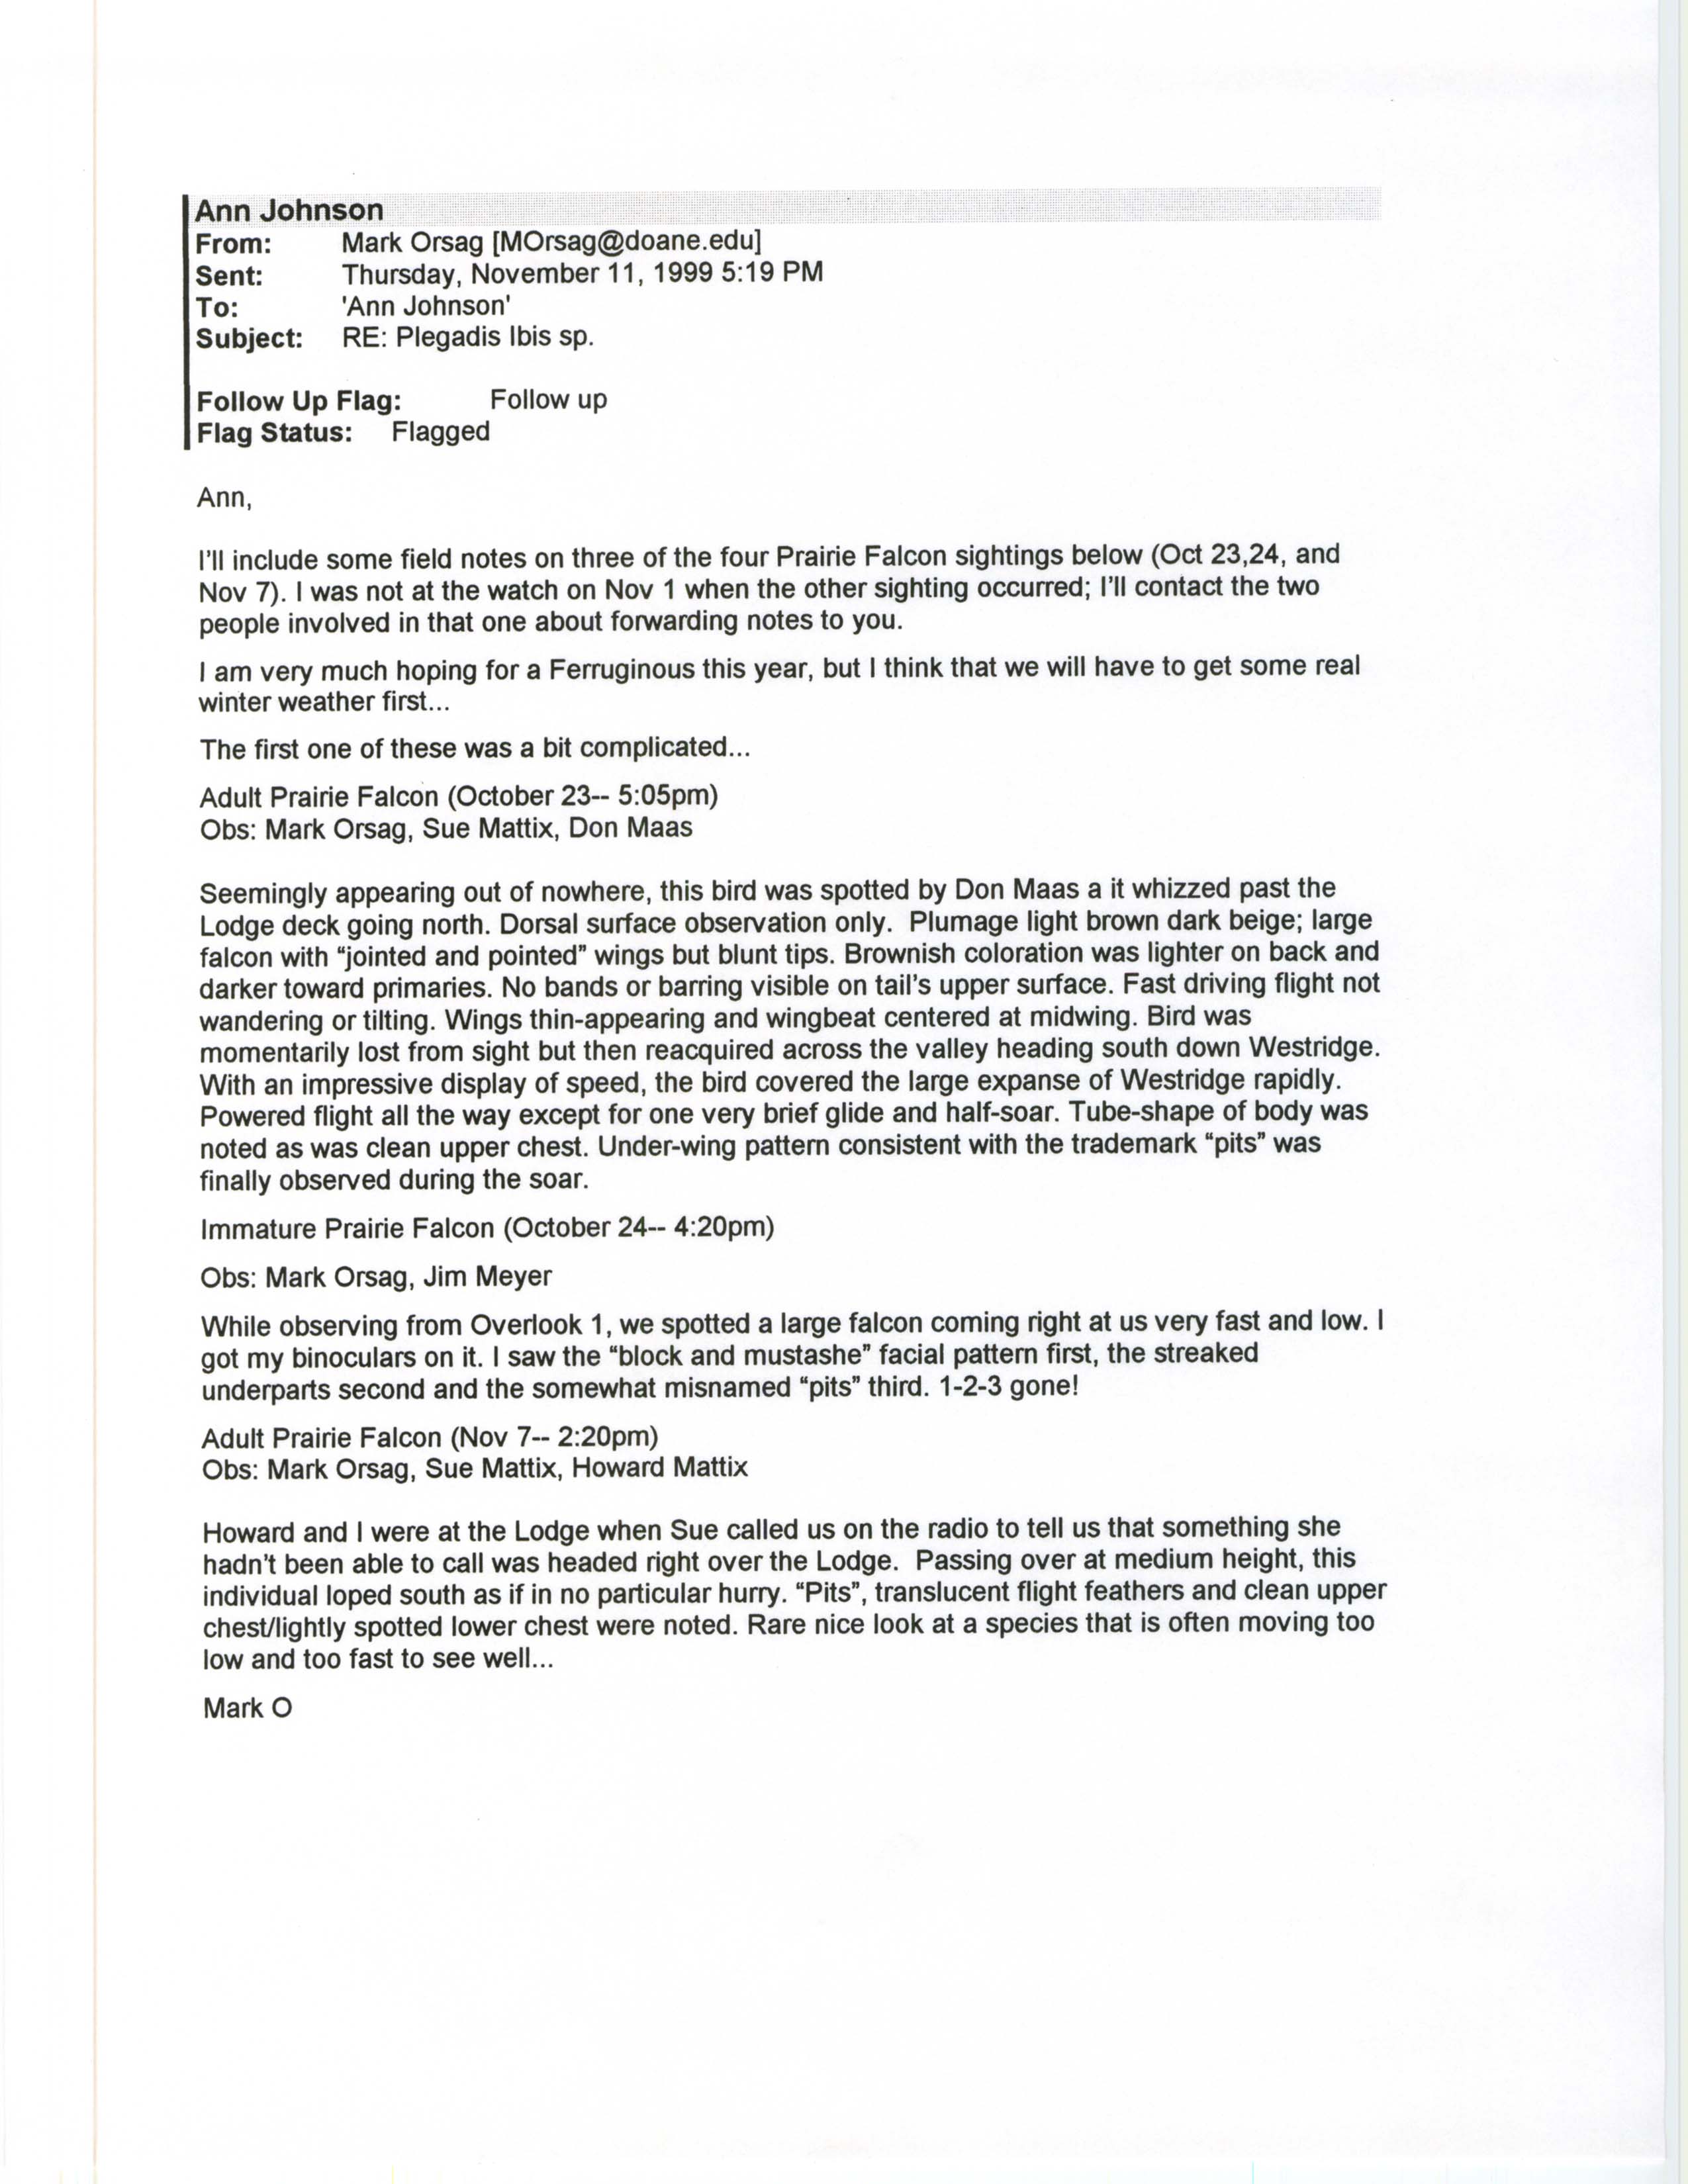 Mark Orsag email to Ann Johnson regarding Prairie Falcon sightings, November 11, 1999